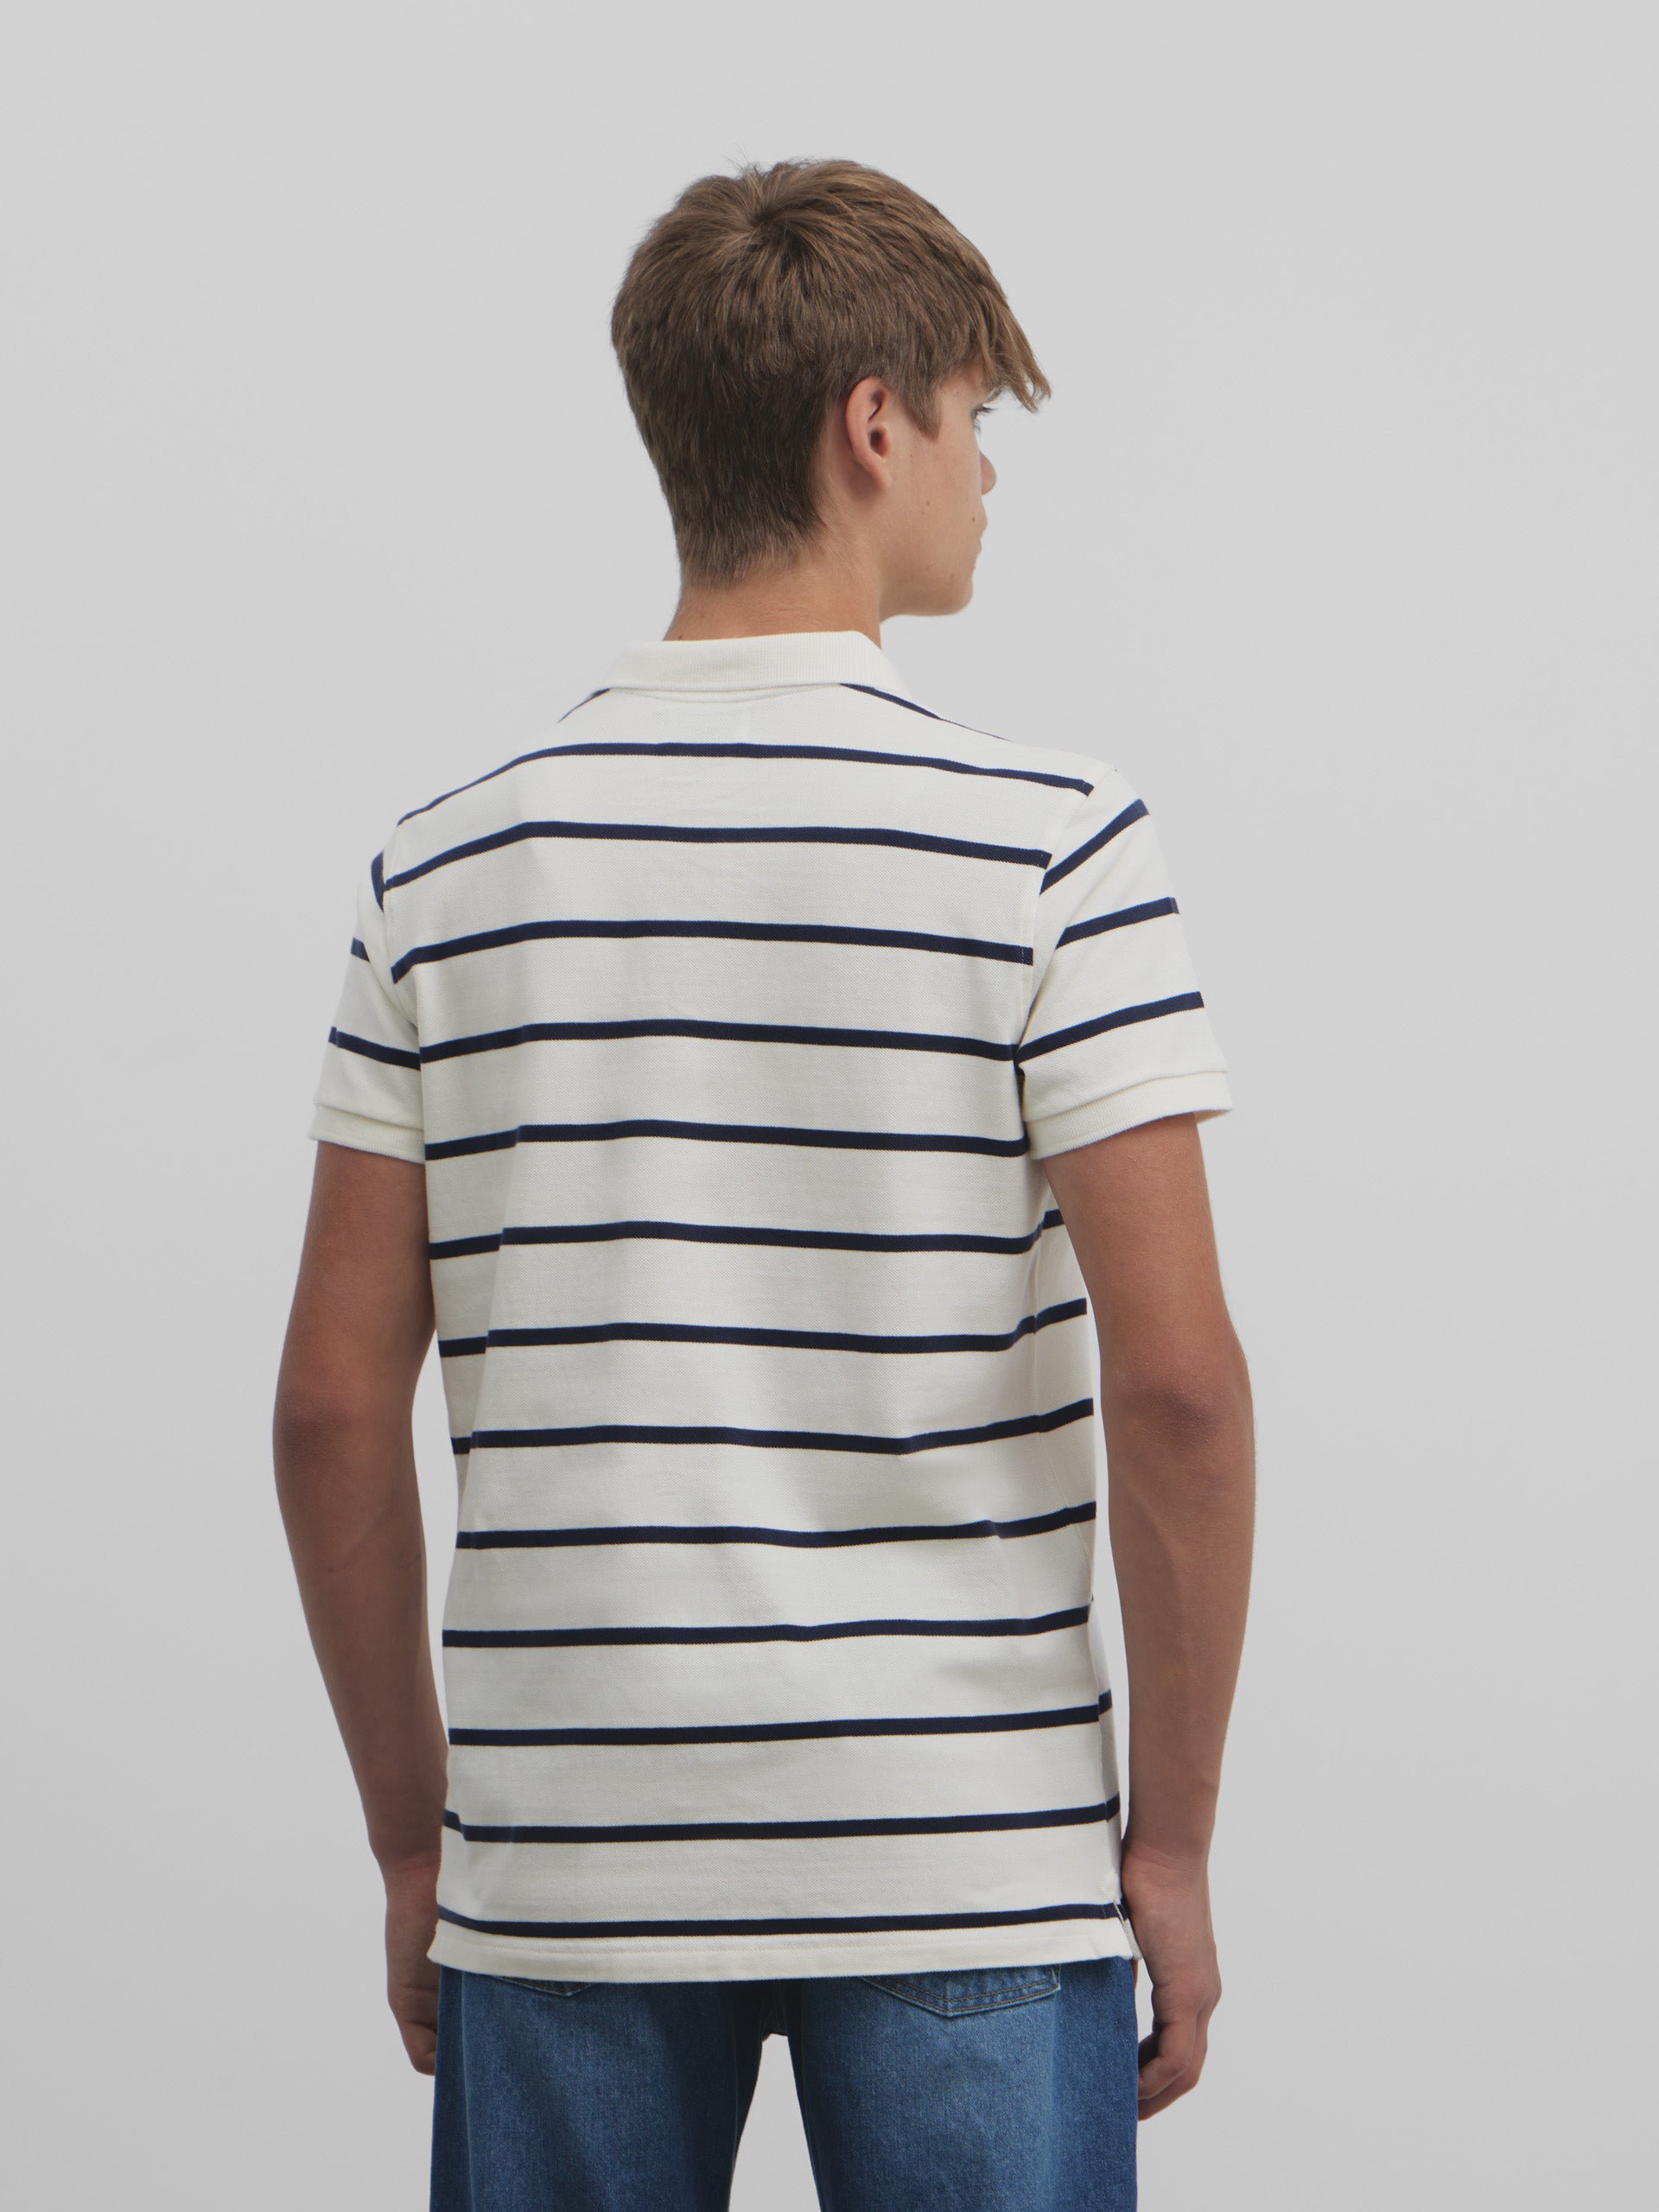 Classic white nautical stripe polo shirt